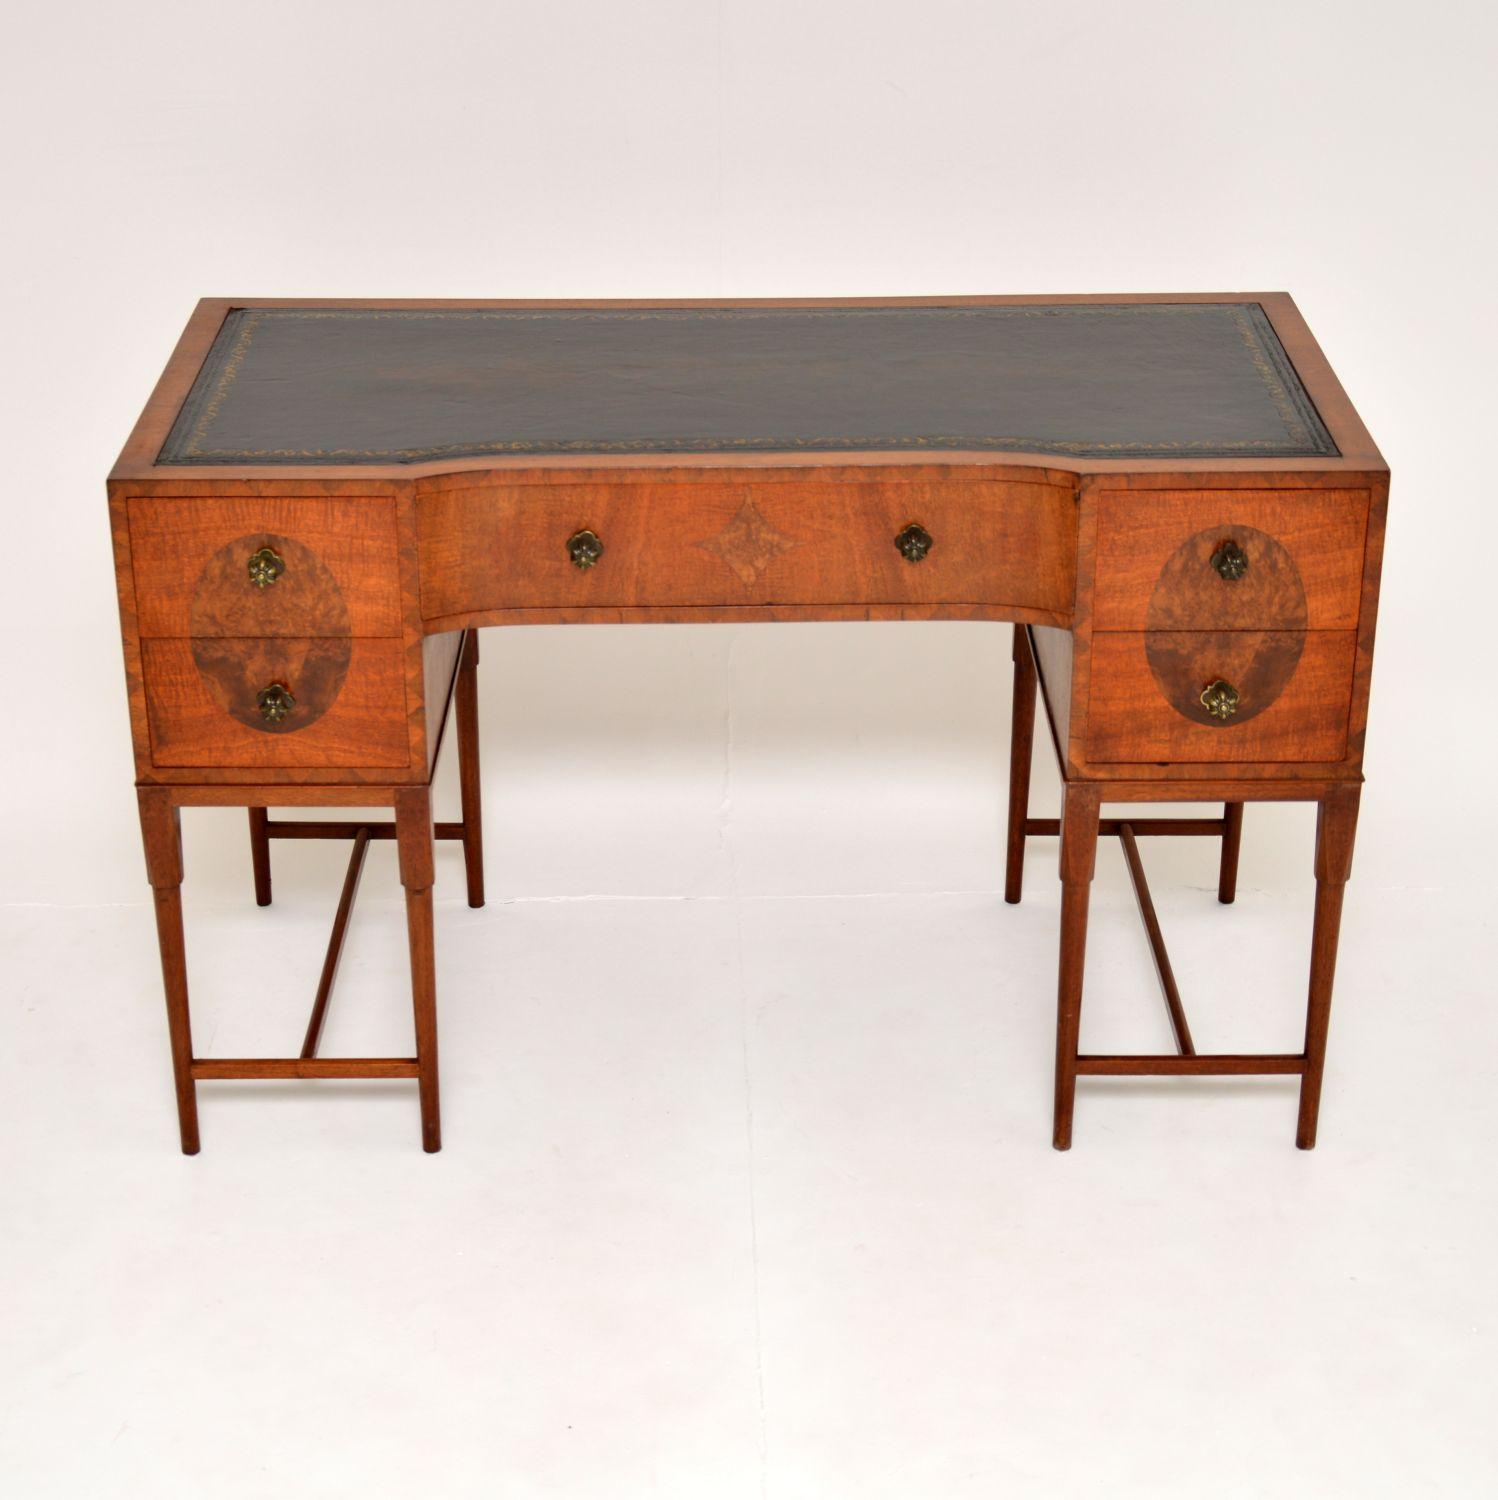 English Antique Walnut & Leather Top Desk